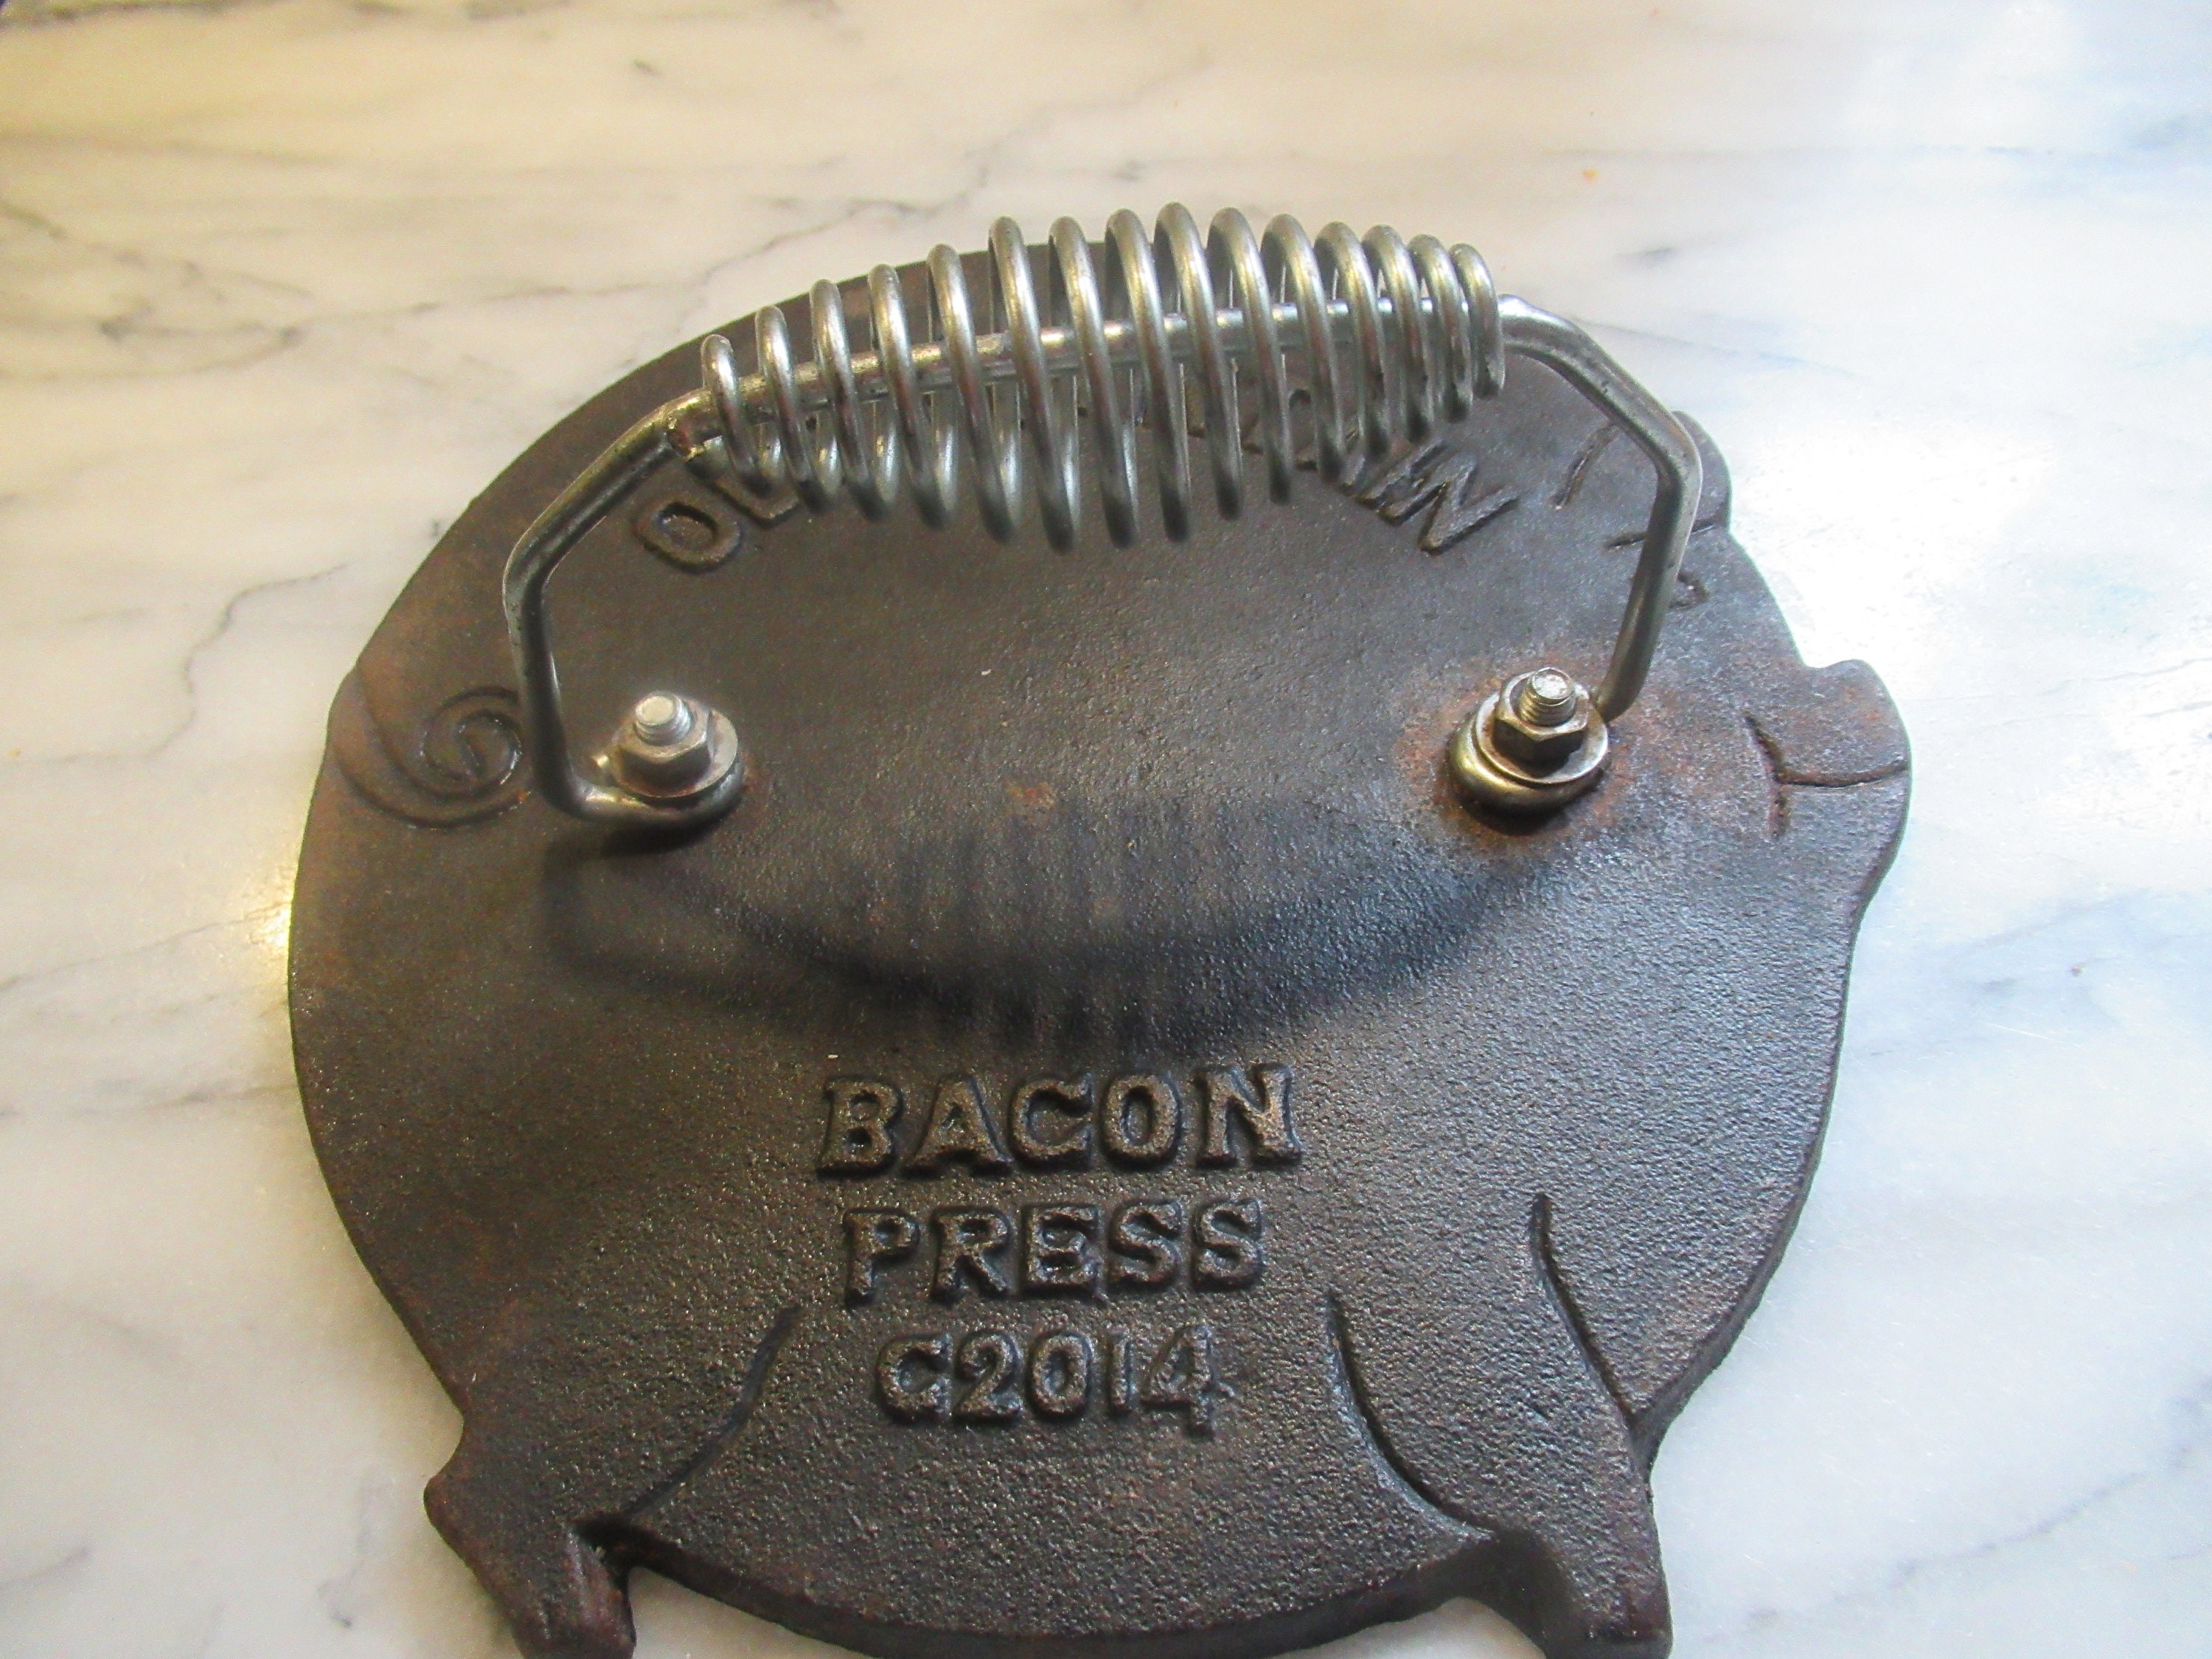 1pc Smash Burger Press, Bacon Press for Griddle, Round Cast Iron